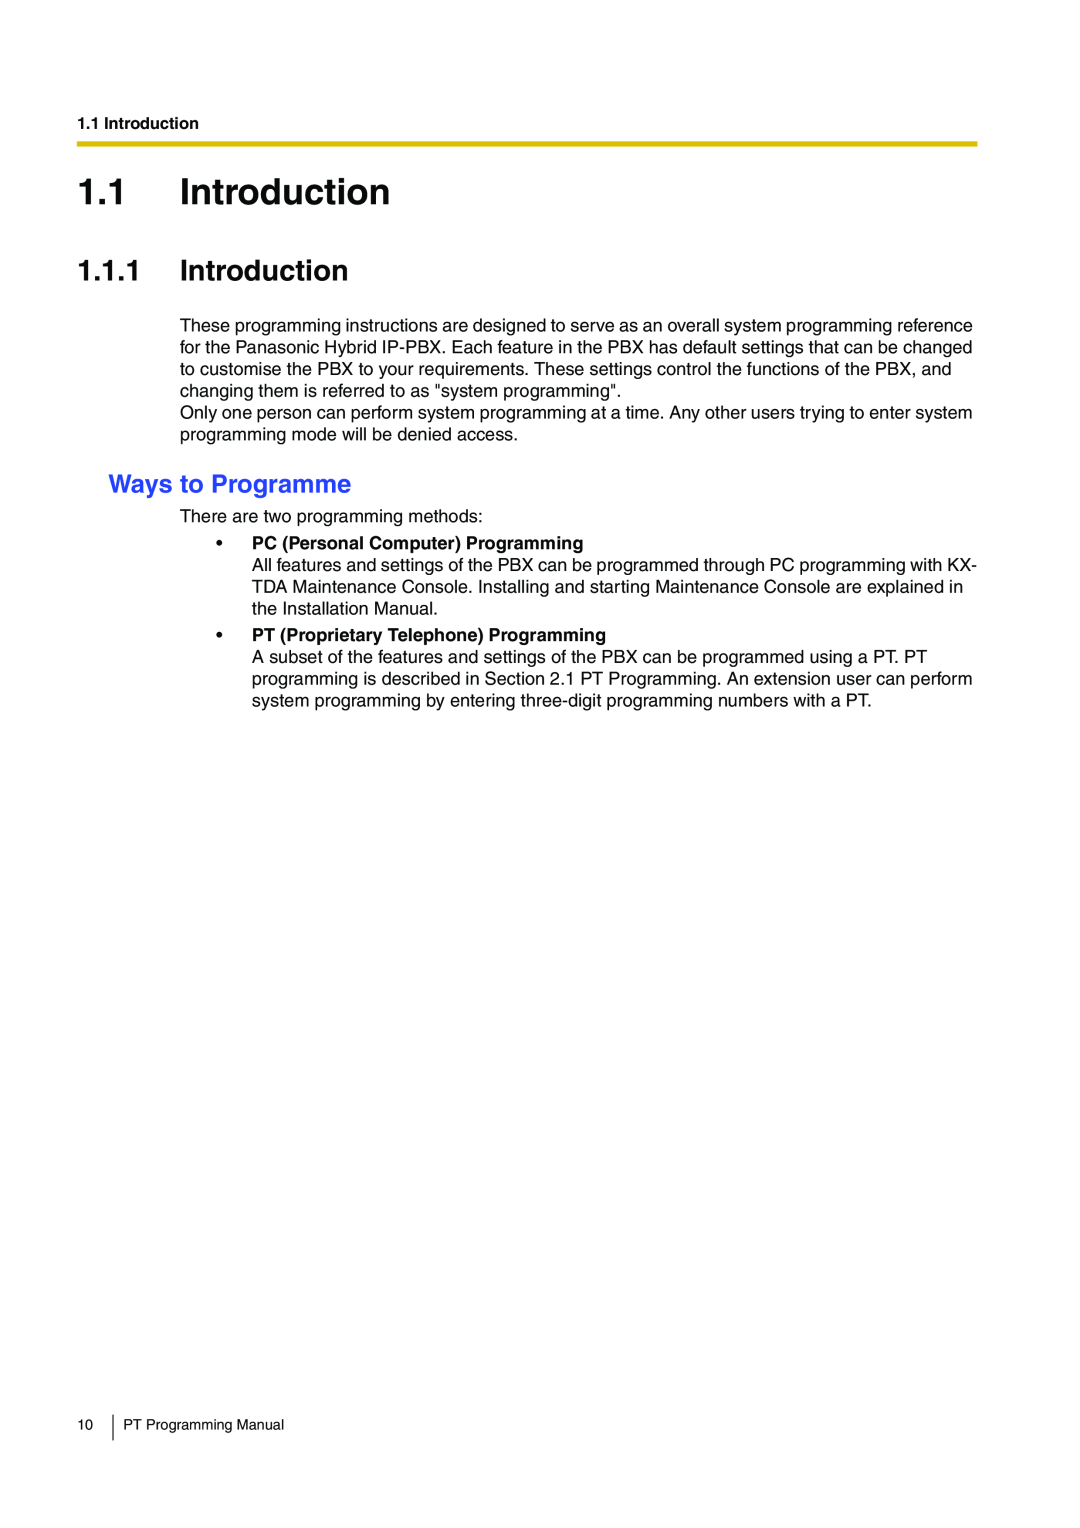 Panasonic KX-TDA200 manual Introduction, Ways to Programme, PC Personal Computer Programming 